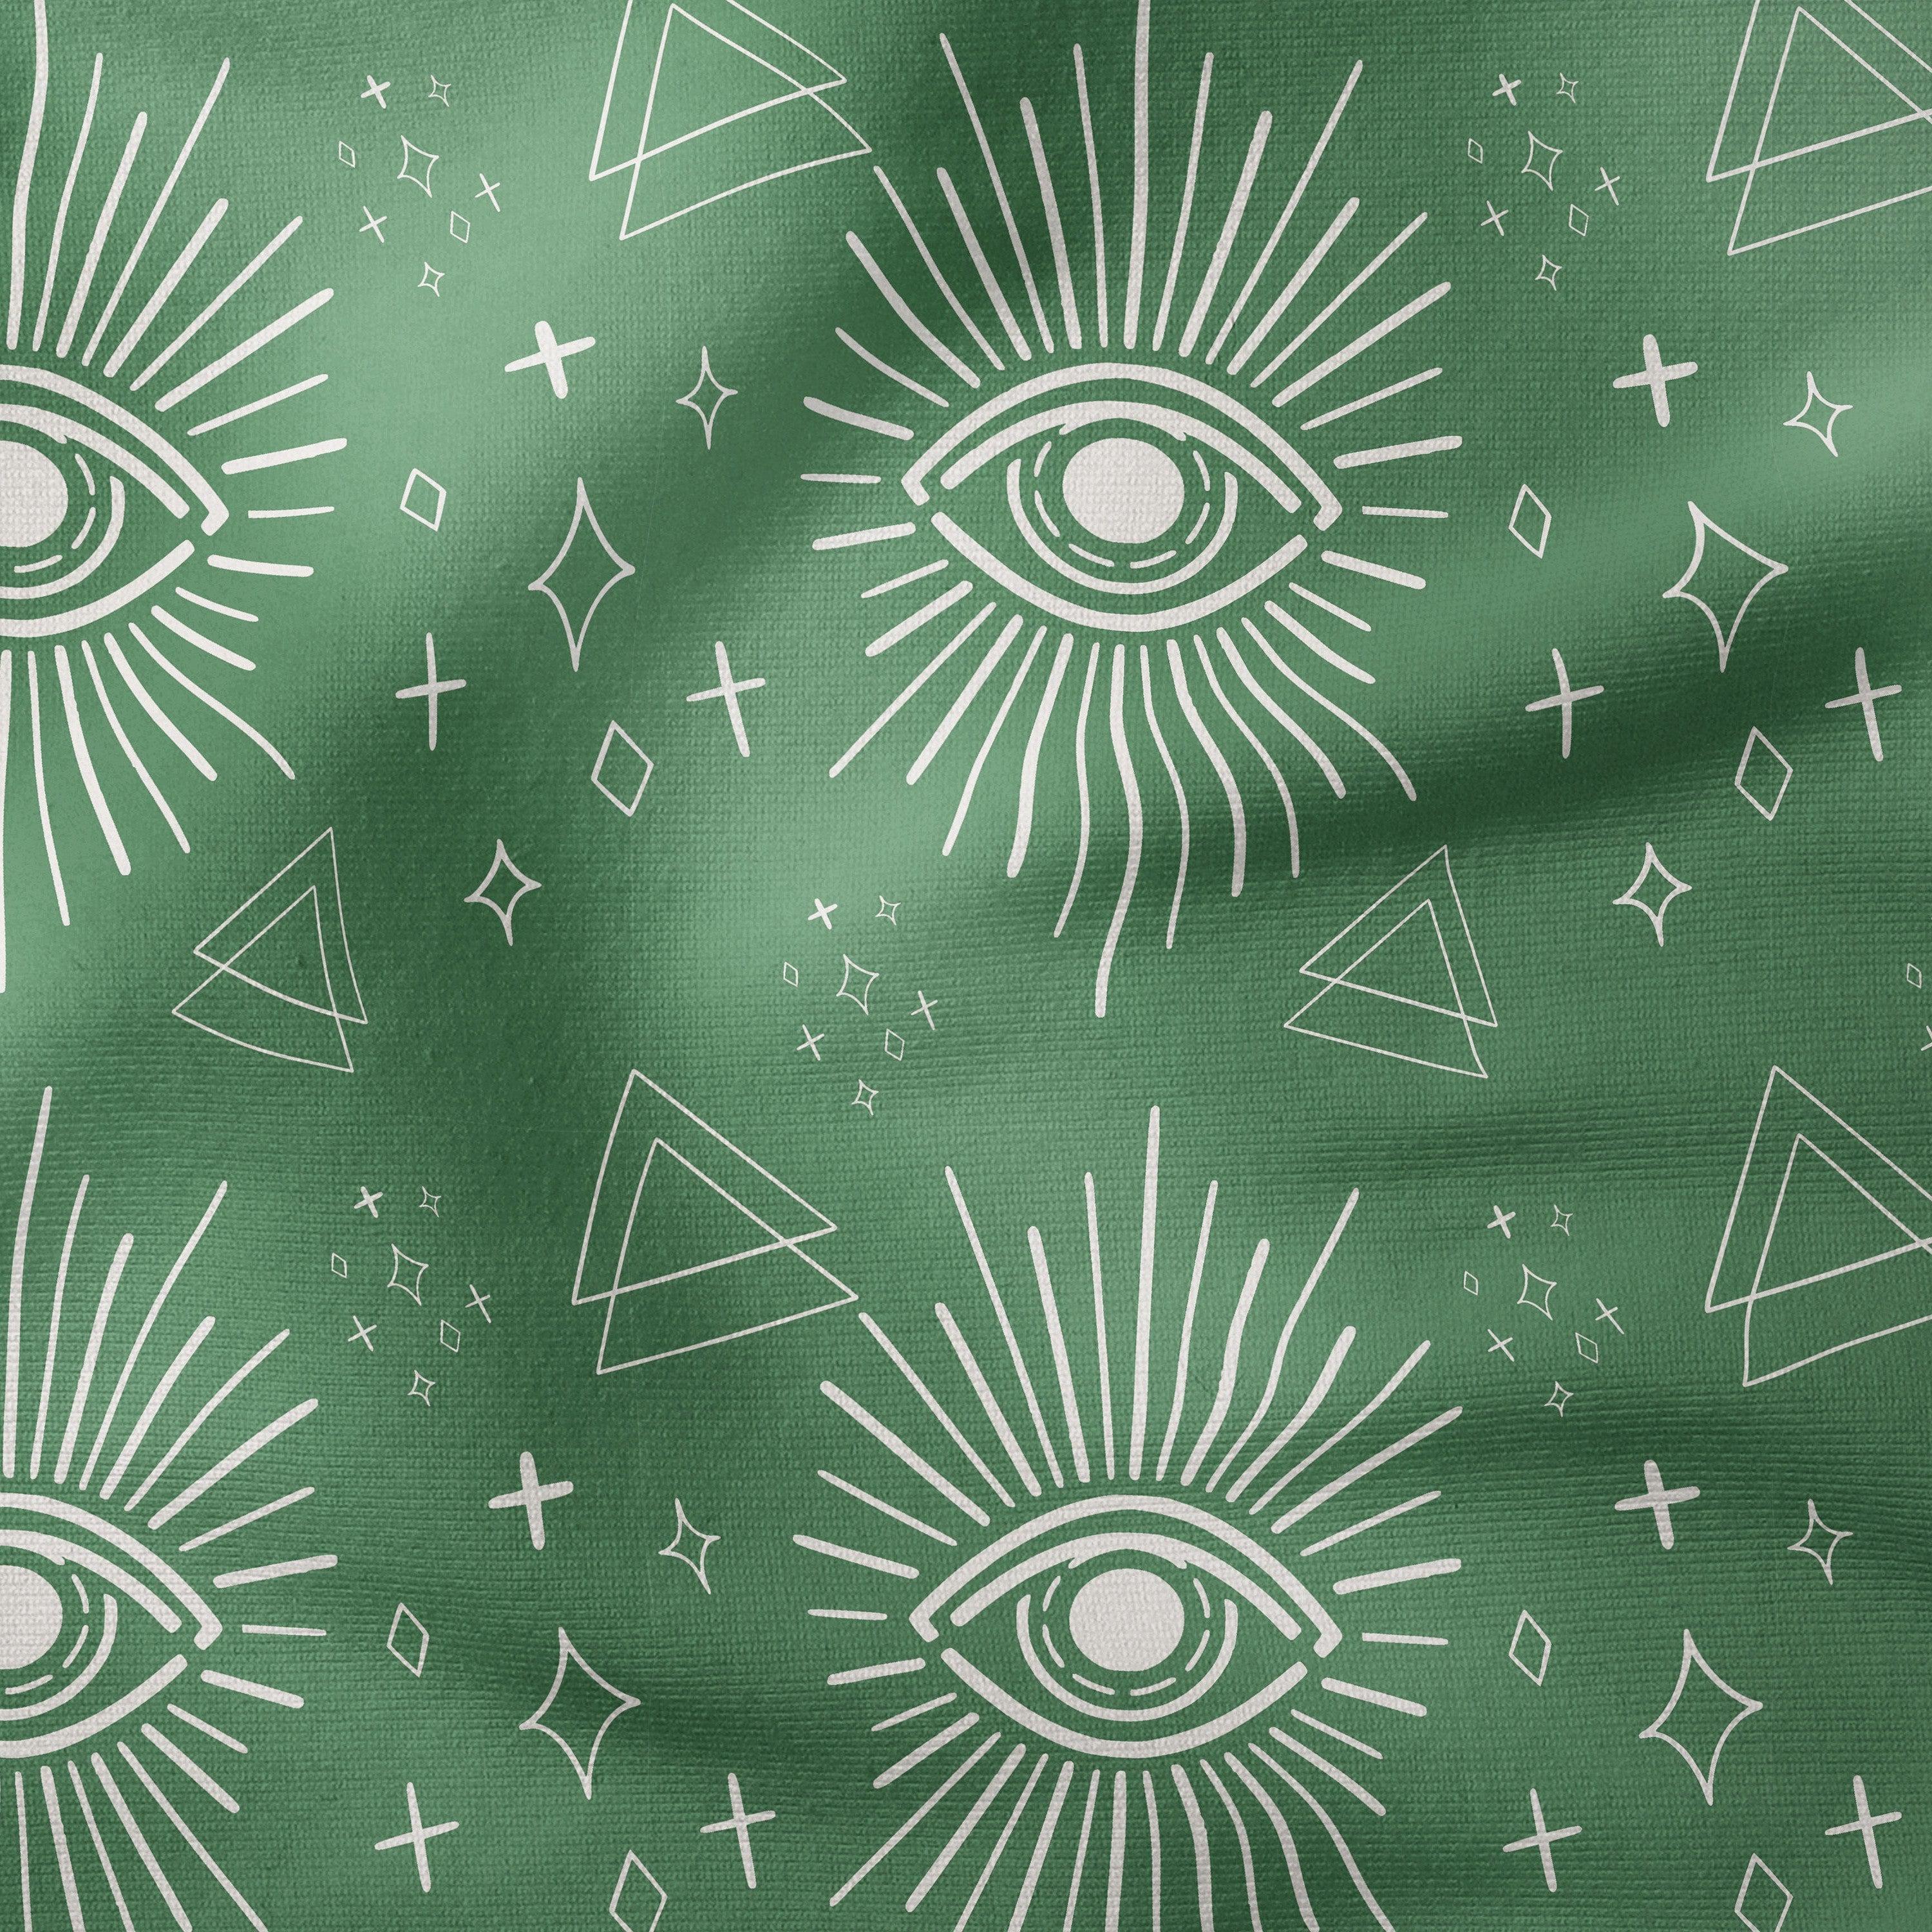 Mystic Eyes-Art Print Fabric-Melco Fabrics-Tofu on Green-Cotton Poplin (110gsm)-Melco Fabrics-Online-Fabric-Shop-Australia